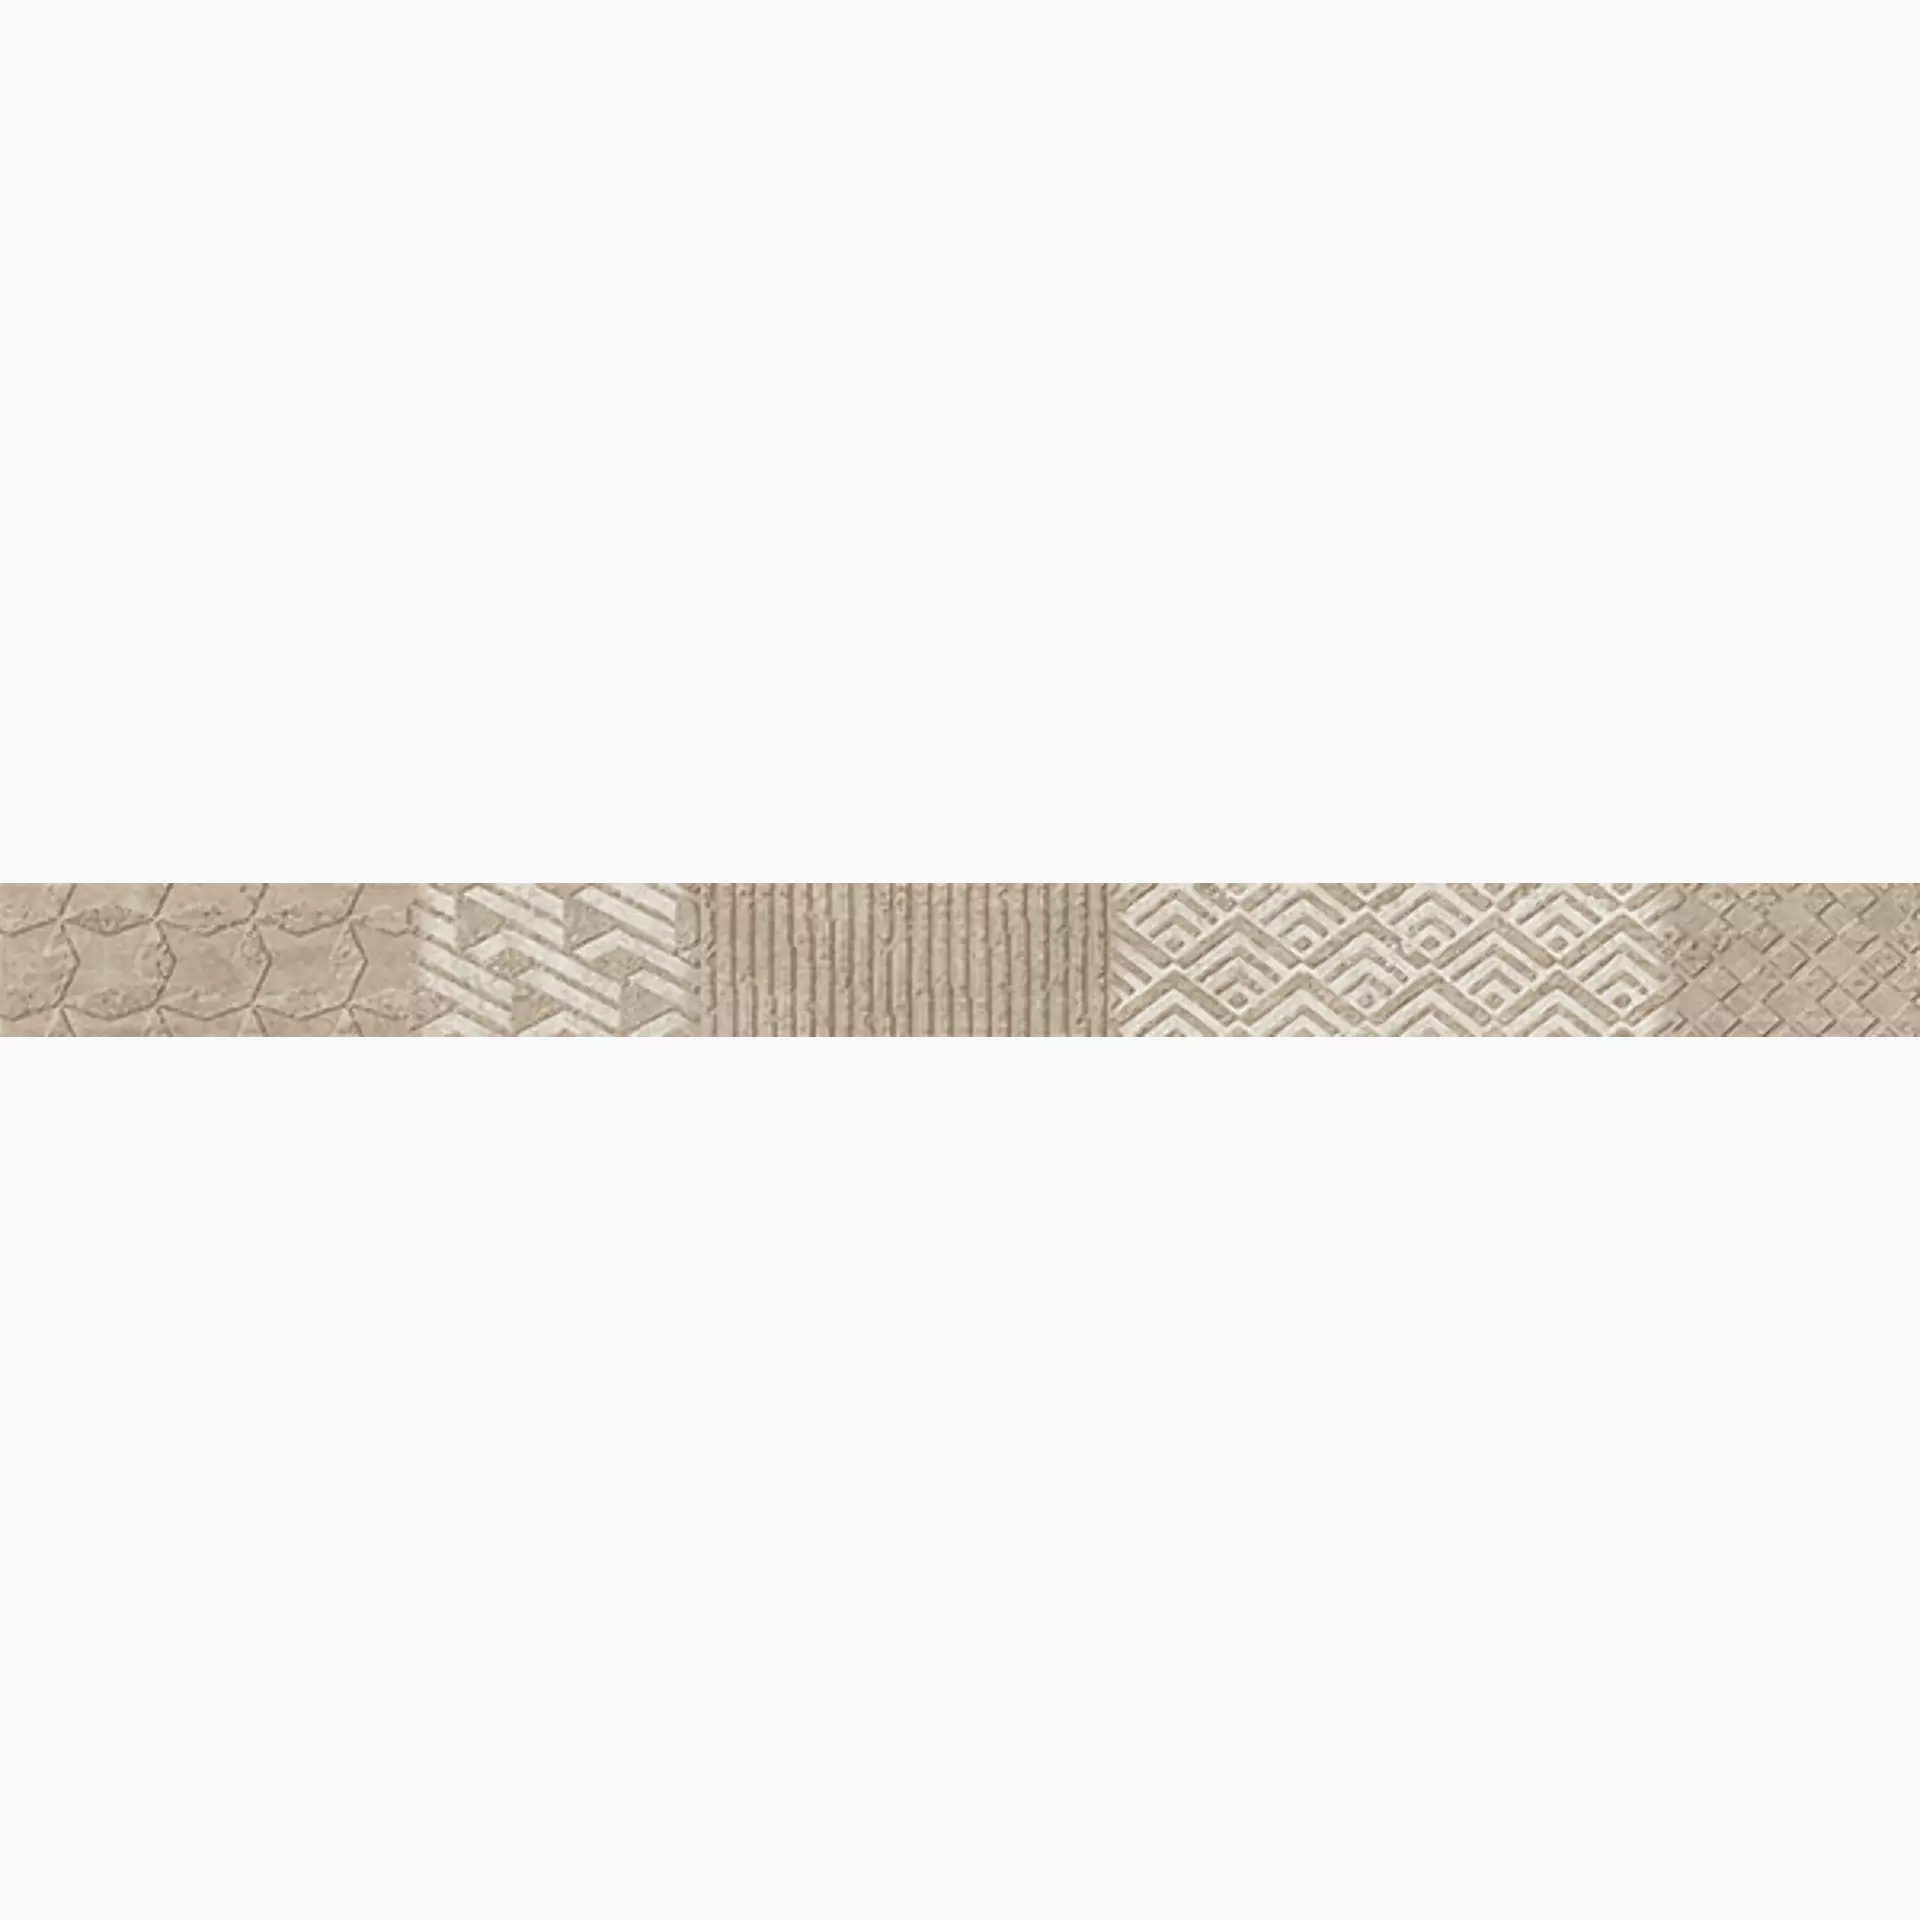 MGM Urban Rope,Ecru Rope,Ecru URBALISEDEROEC 4,8x60cm Bordüre Eden 8,5mm